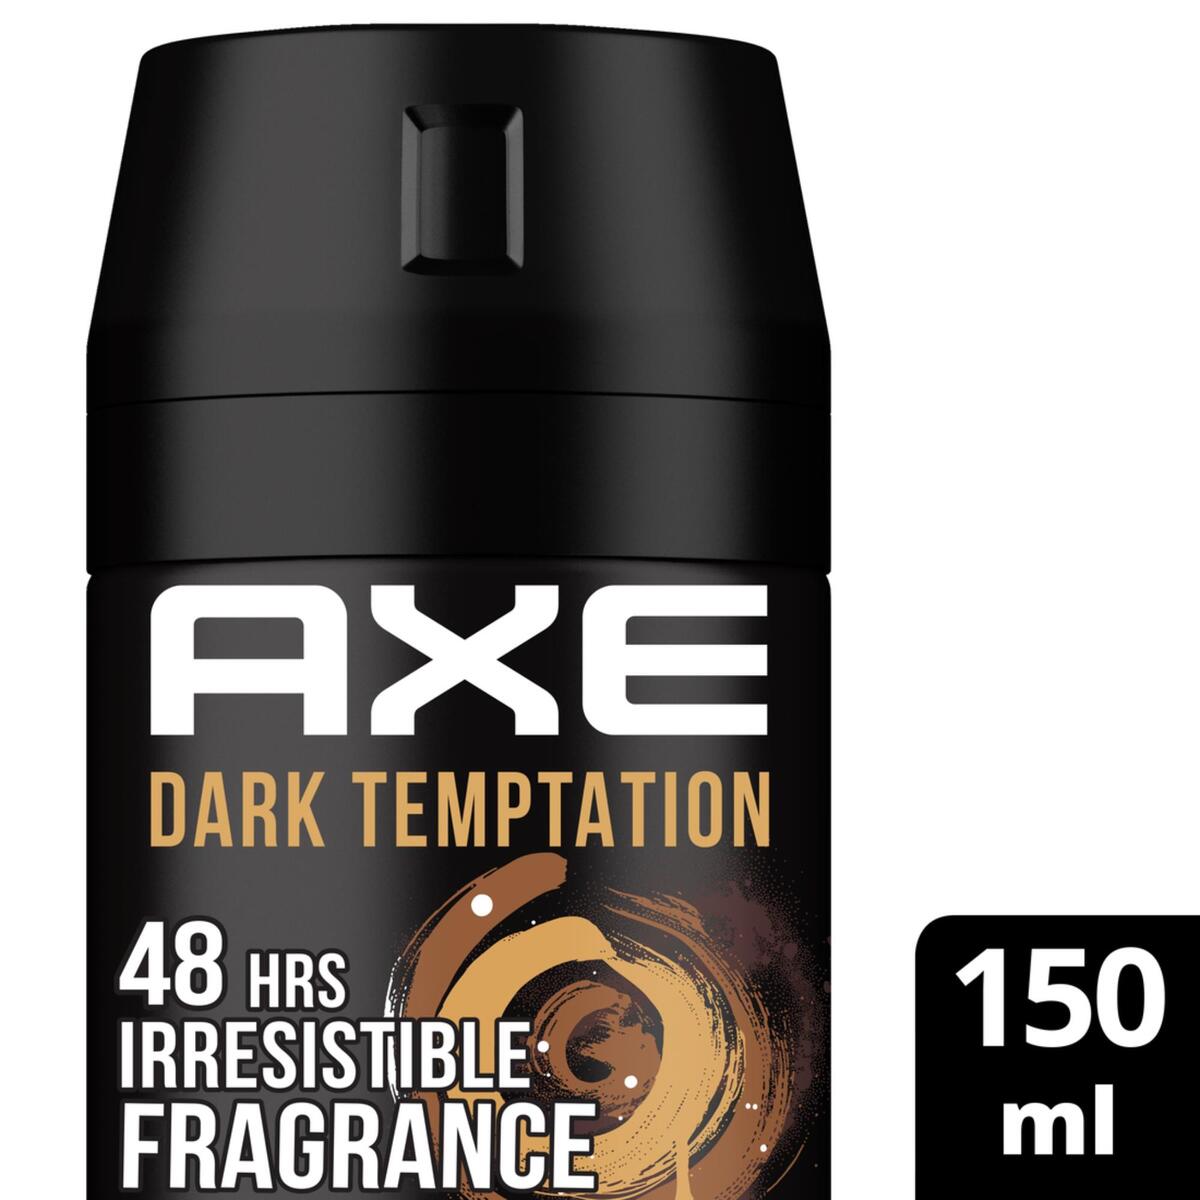 Axe Dark Temptation 48H Body Spray Deodorant 150 ml